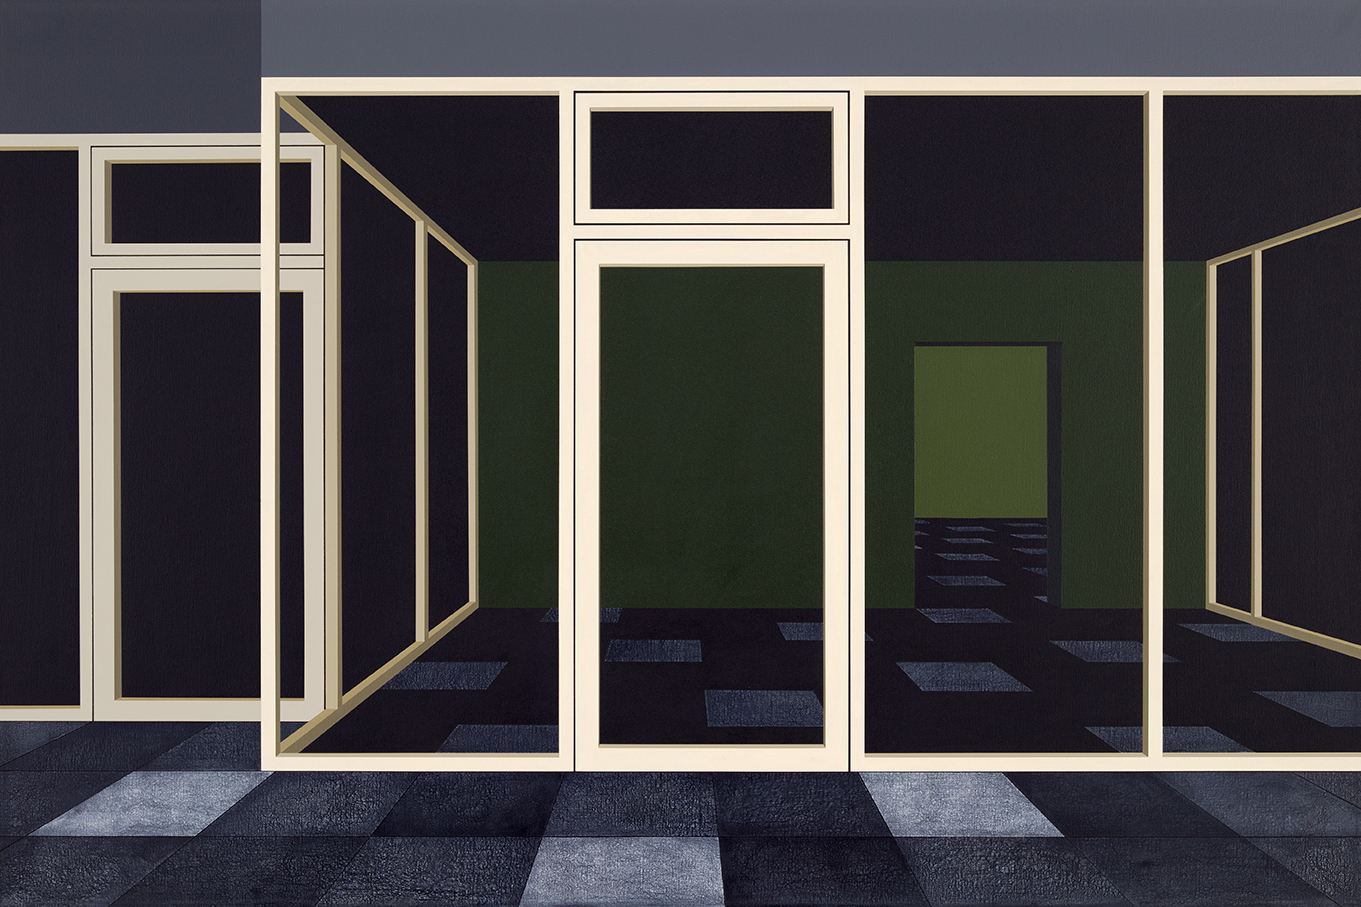 Henrik Samuelsson."Elsewhere", 2022, mixed media on canvas, 100 x 150 cm